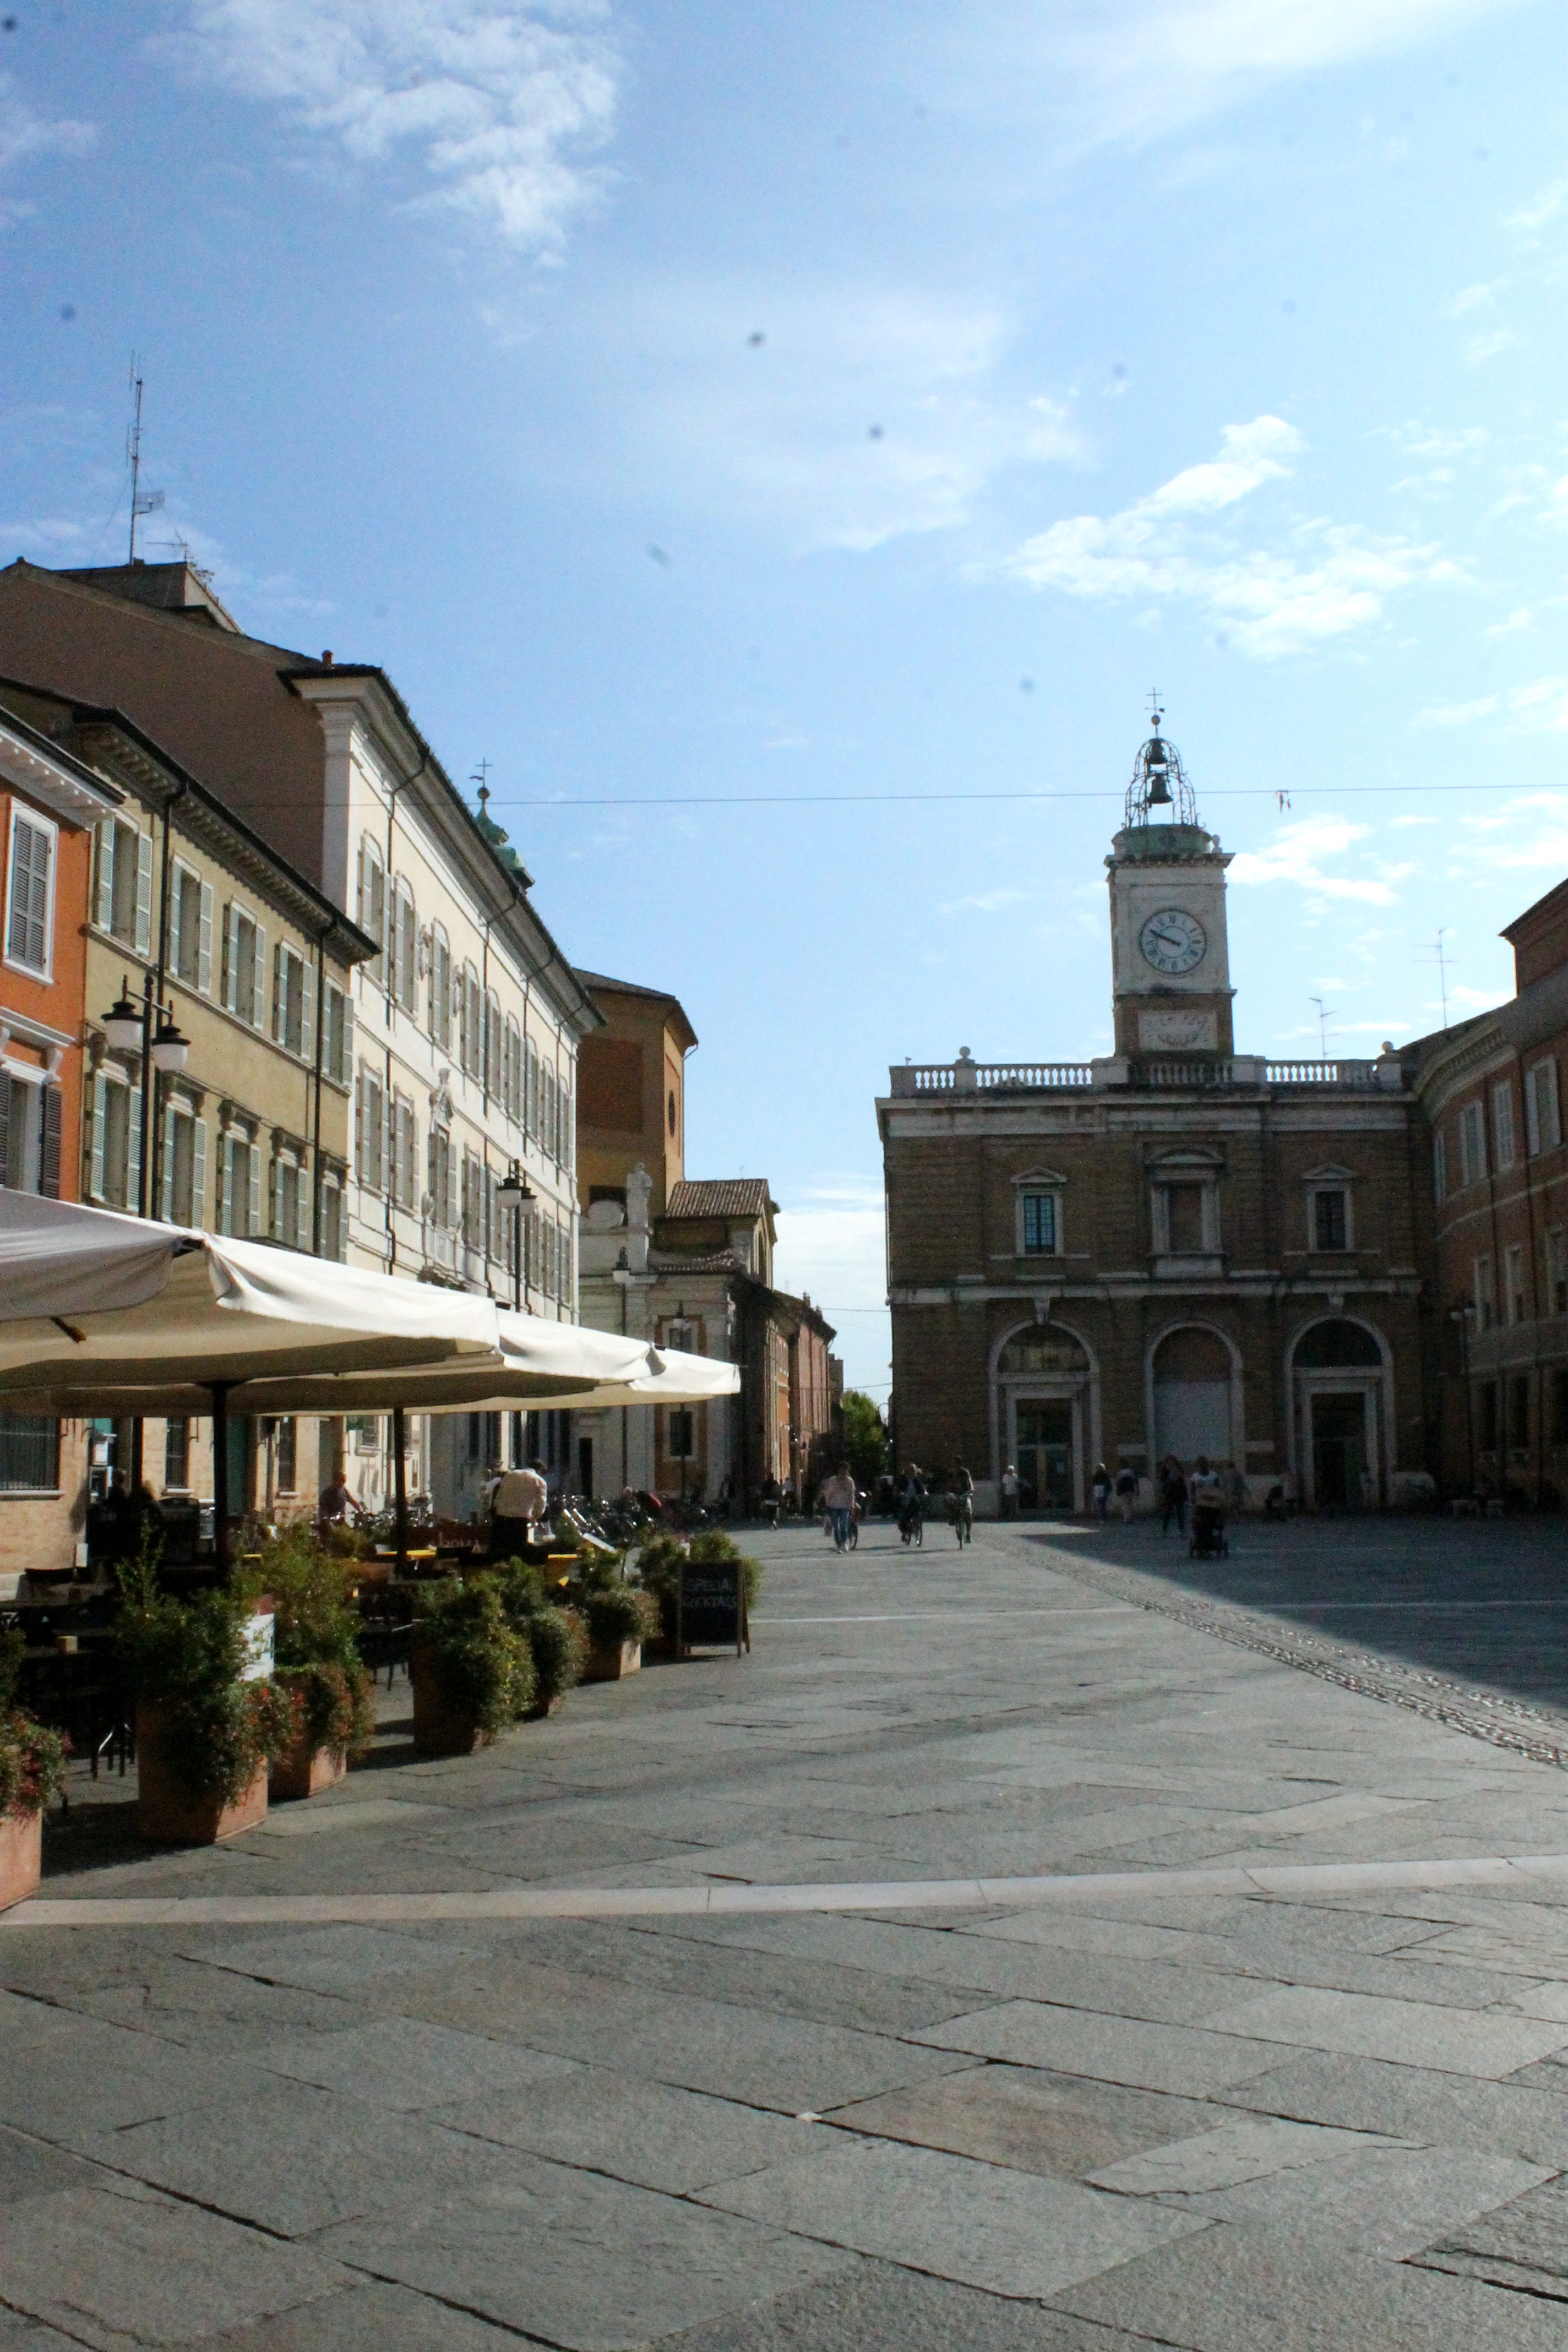 photo: https://upload.wikimedia.org/wikipedia/commons/1/13/Piazza_del_Popolo_-_Ravenna.jpg